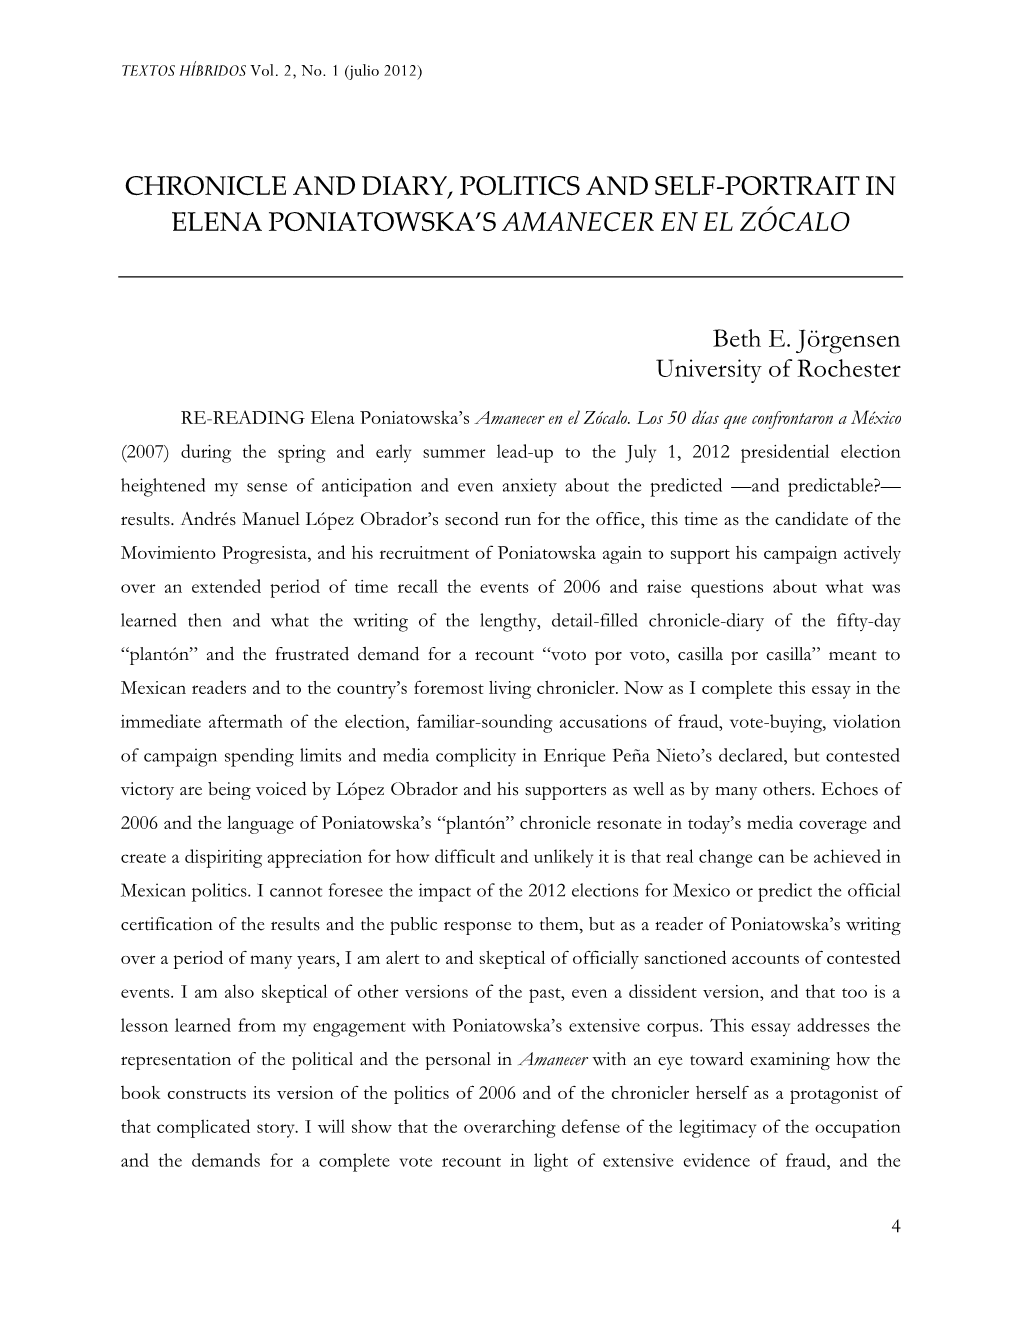 Chronicle and Diary, Politics and Self-Portrait in Elena Poniatowska’S Amanecer En El Zócalo